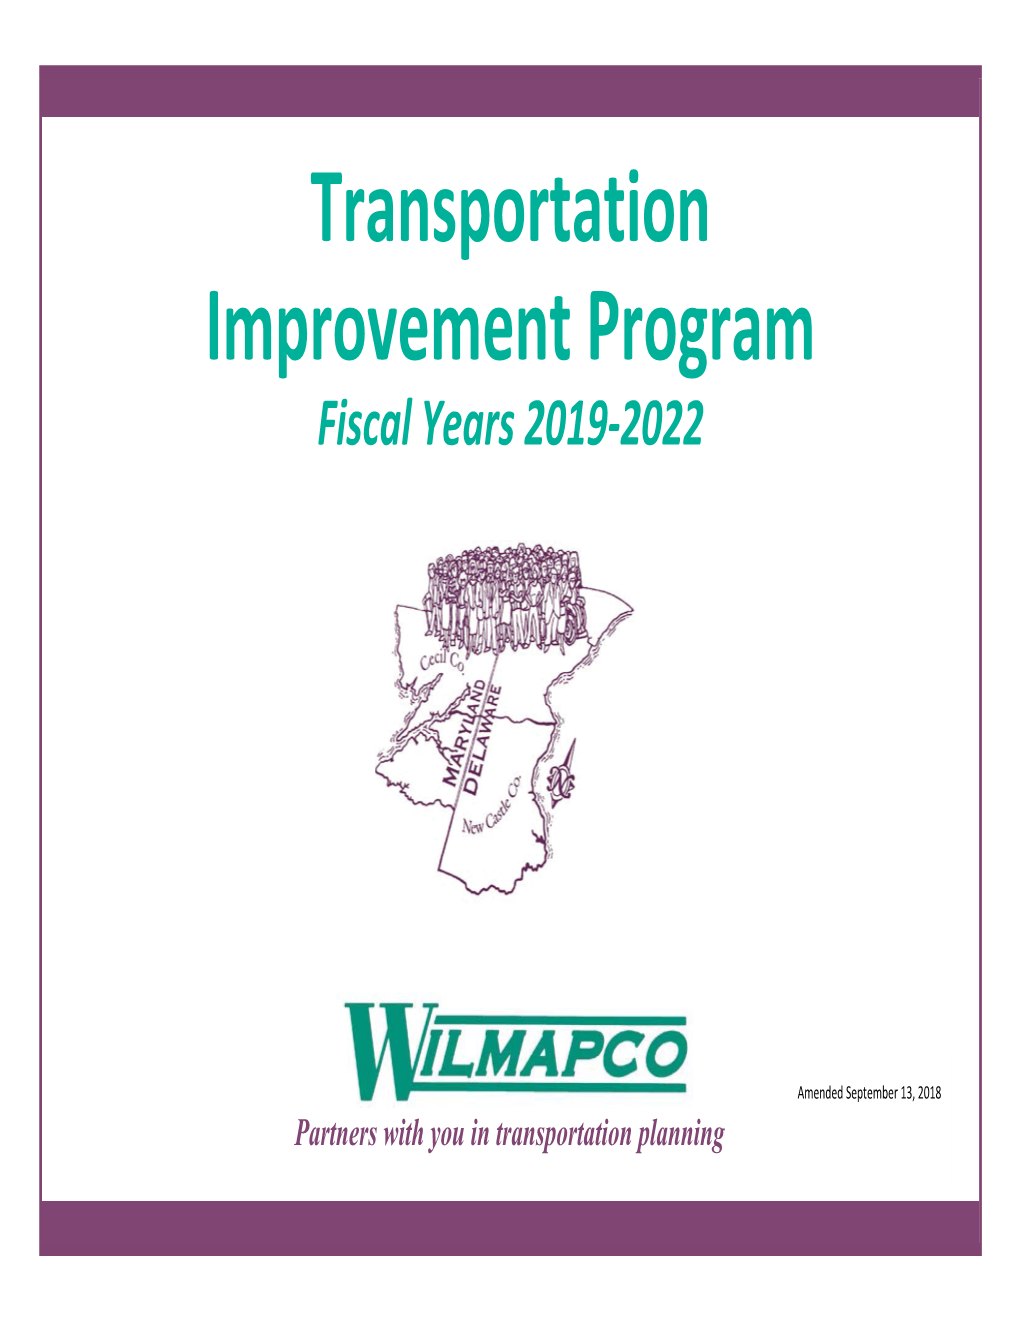 Transportation Improvement Program Fiscal Years 2019-2022